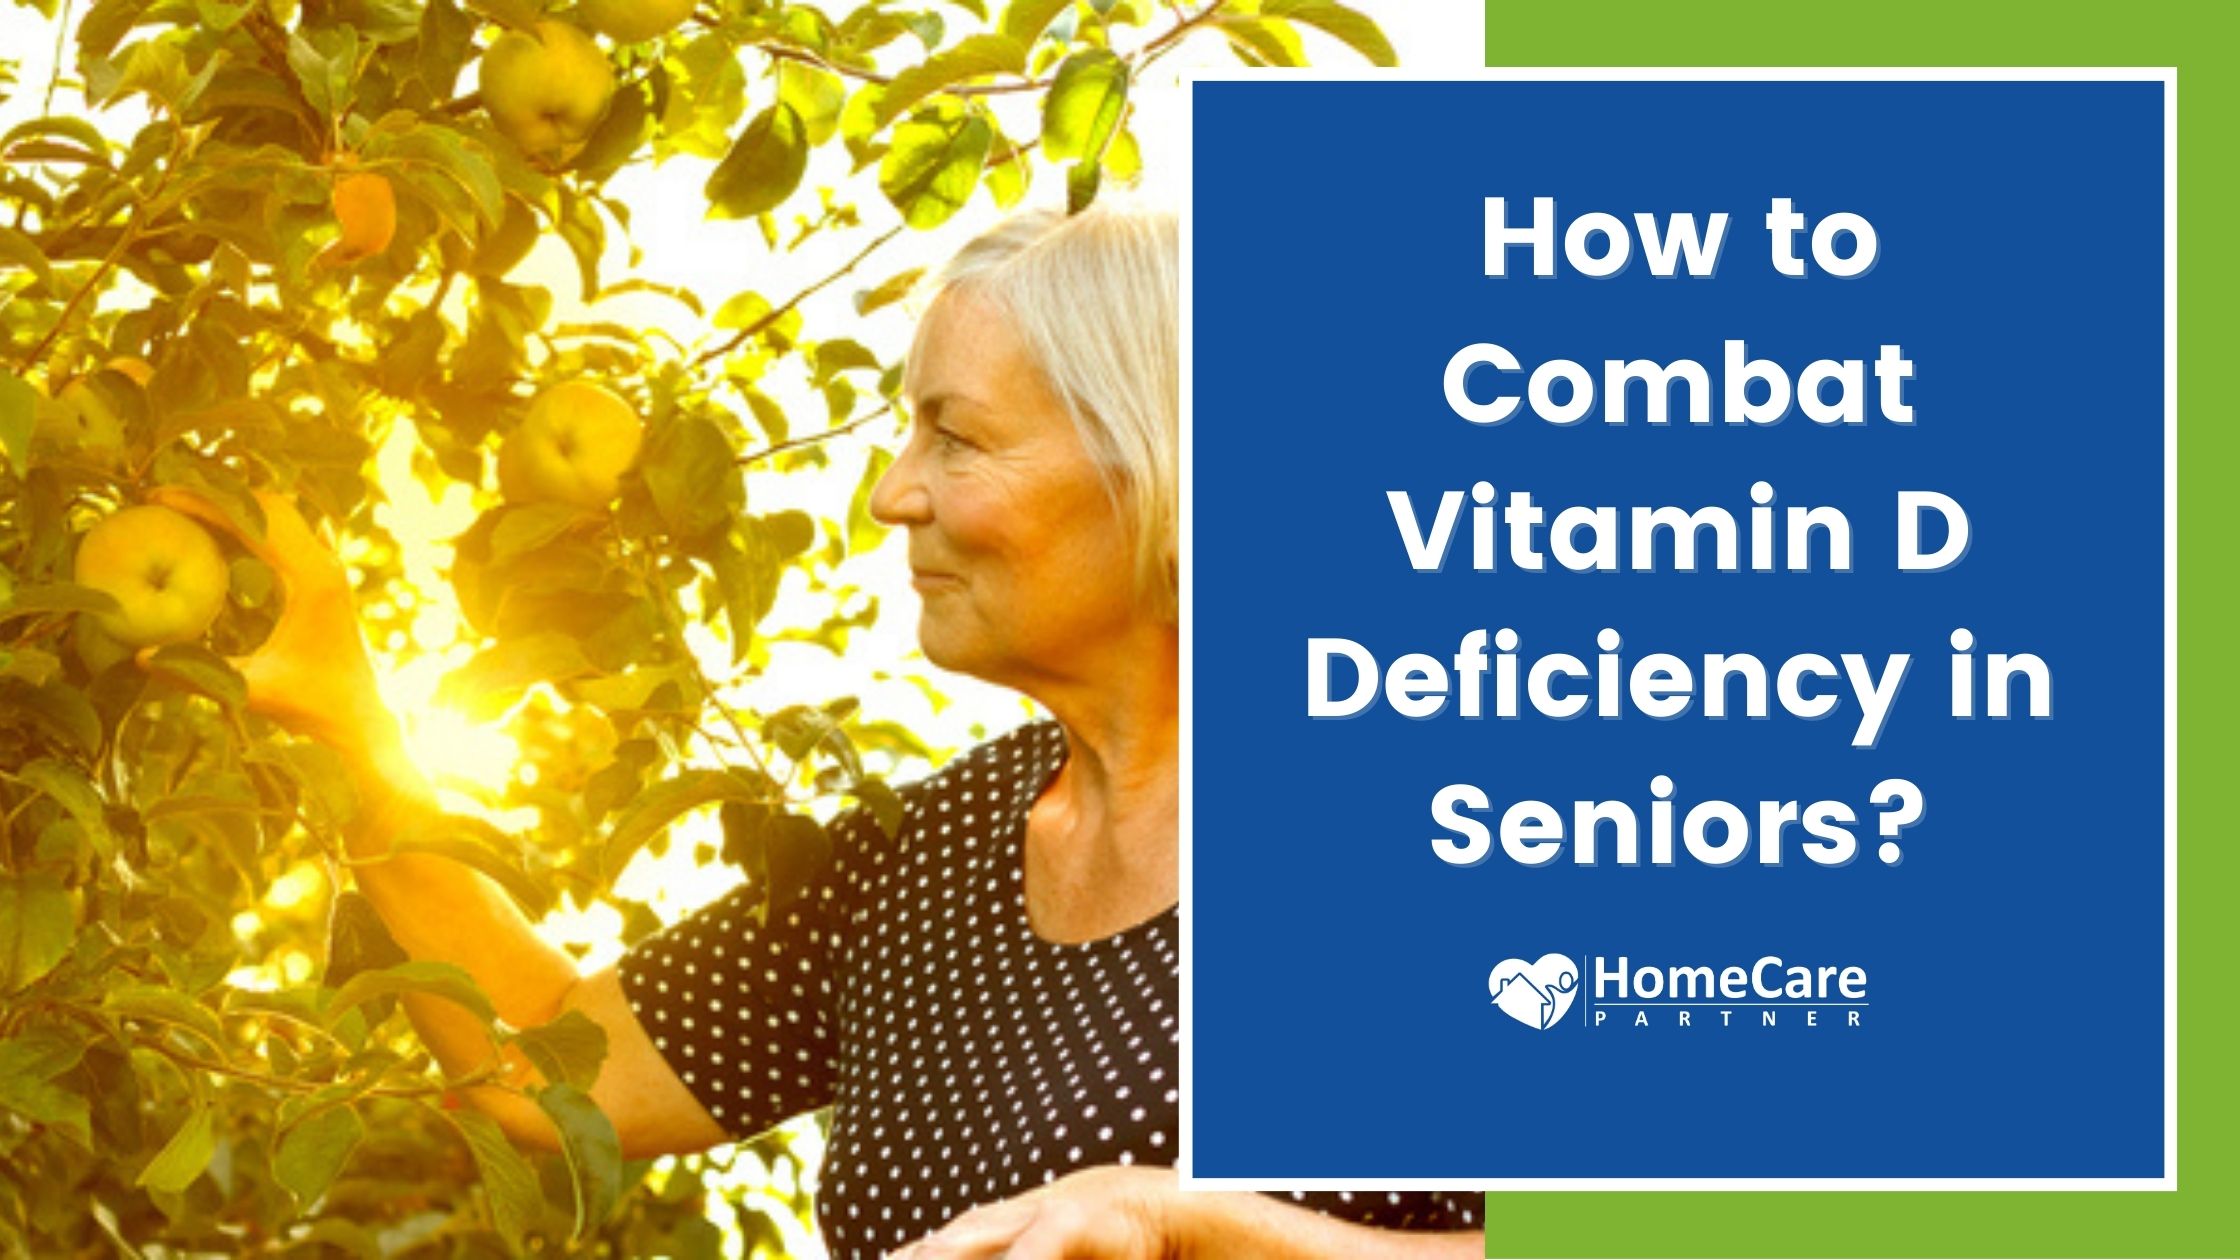 Combat Vitamin D Deficiency in Seniors